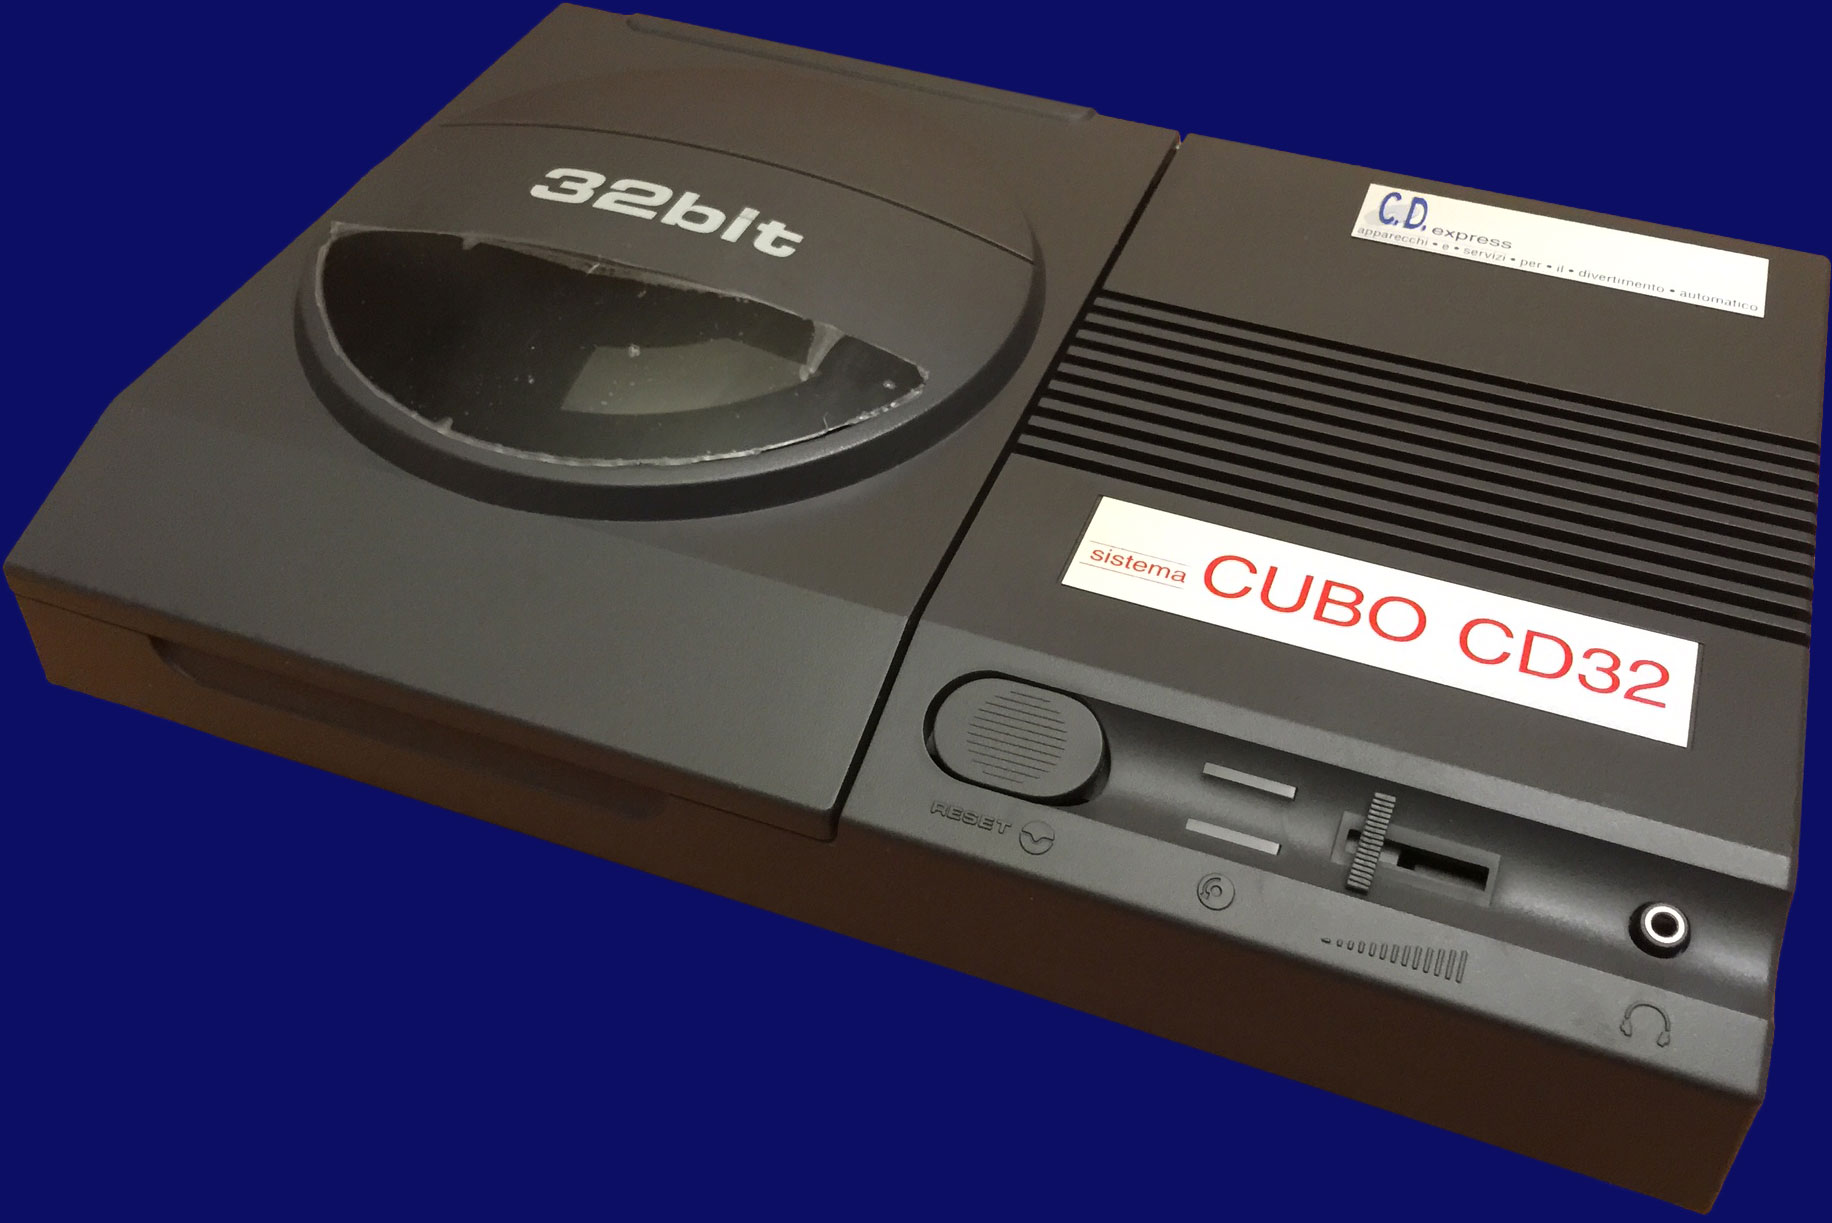 C.D. Express Cubo CD32 - CD32 base unit, top side